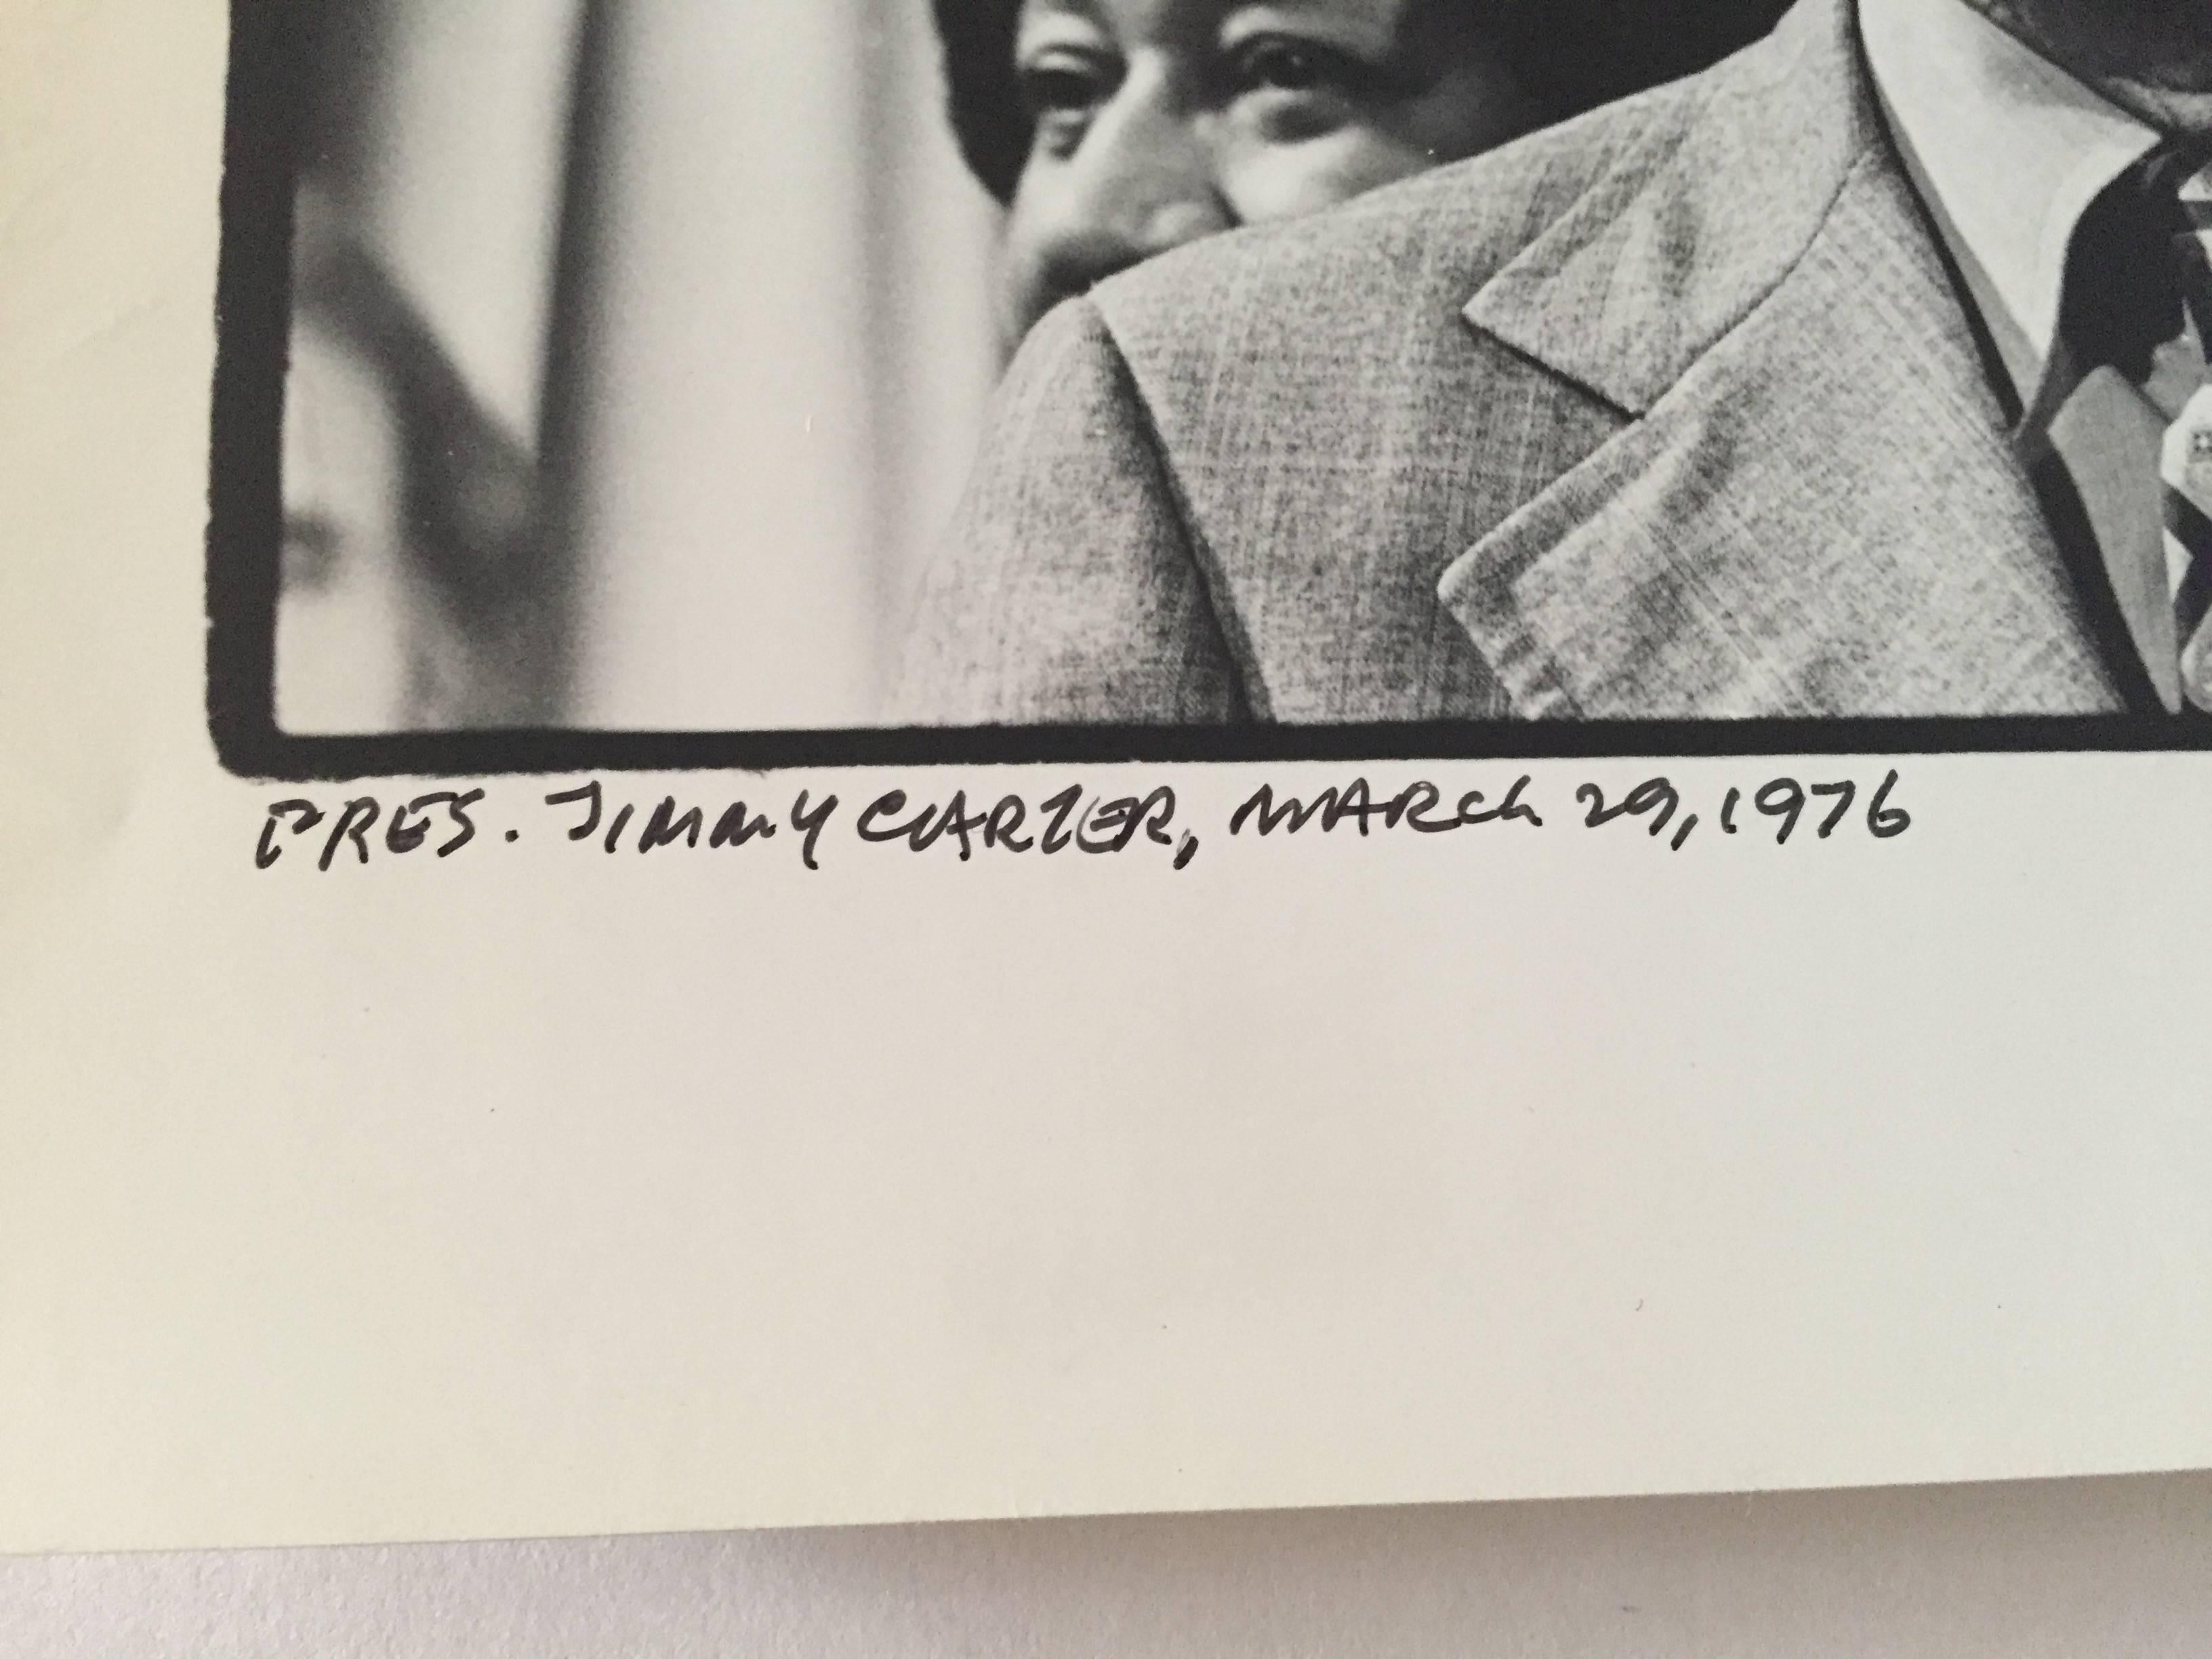 Prés. Jimmy Carter, 29 mars 1976 - Photograph de Fred McDarrah